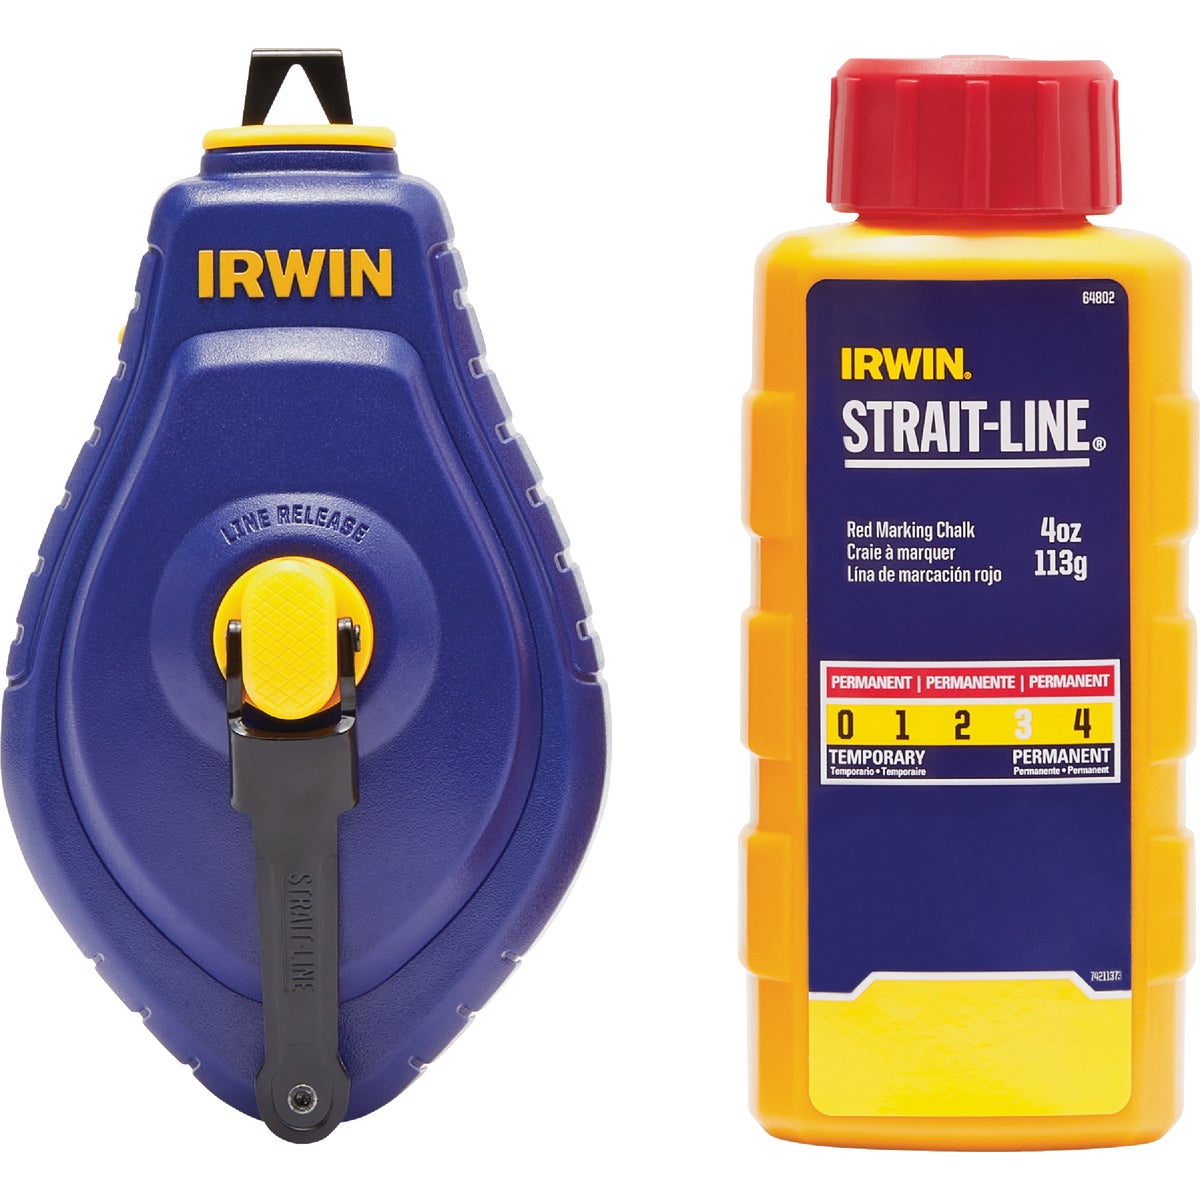 Irwin STRAIT-LINE Speed-Line 100 Ft. Chalk Line Reel and Chalk, Red